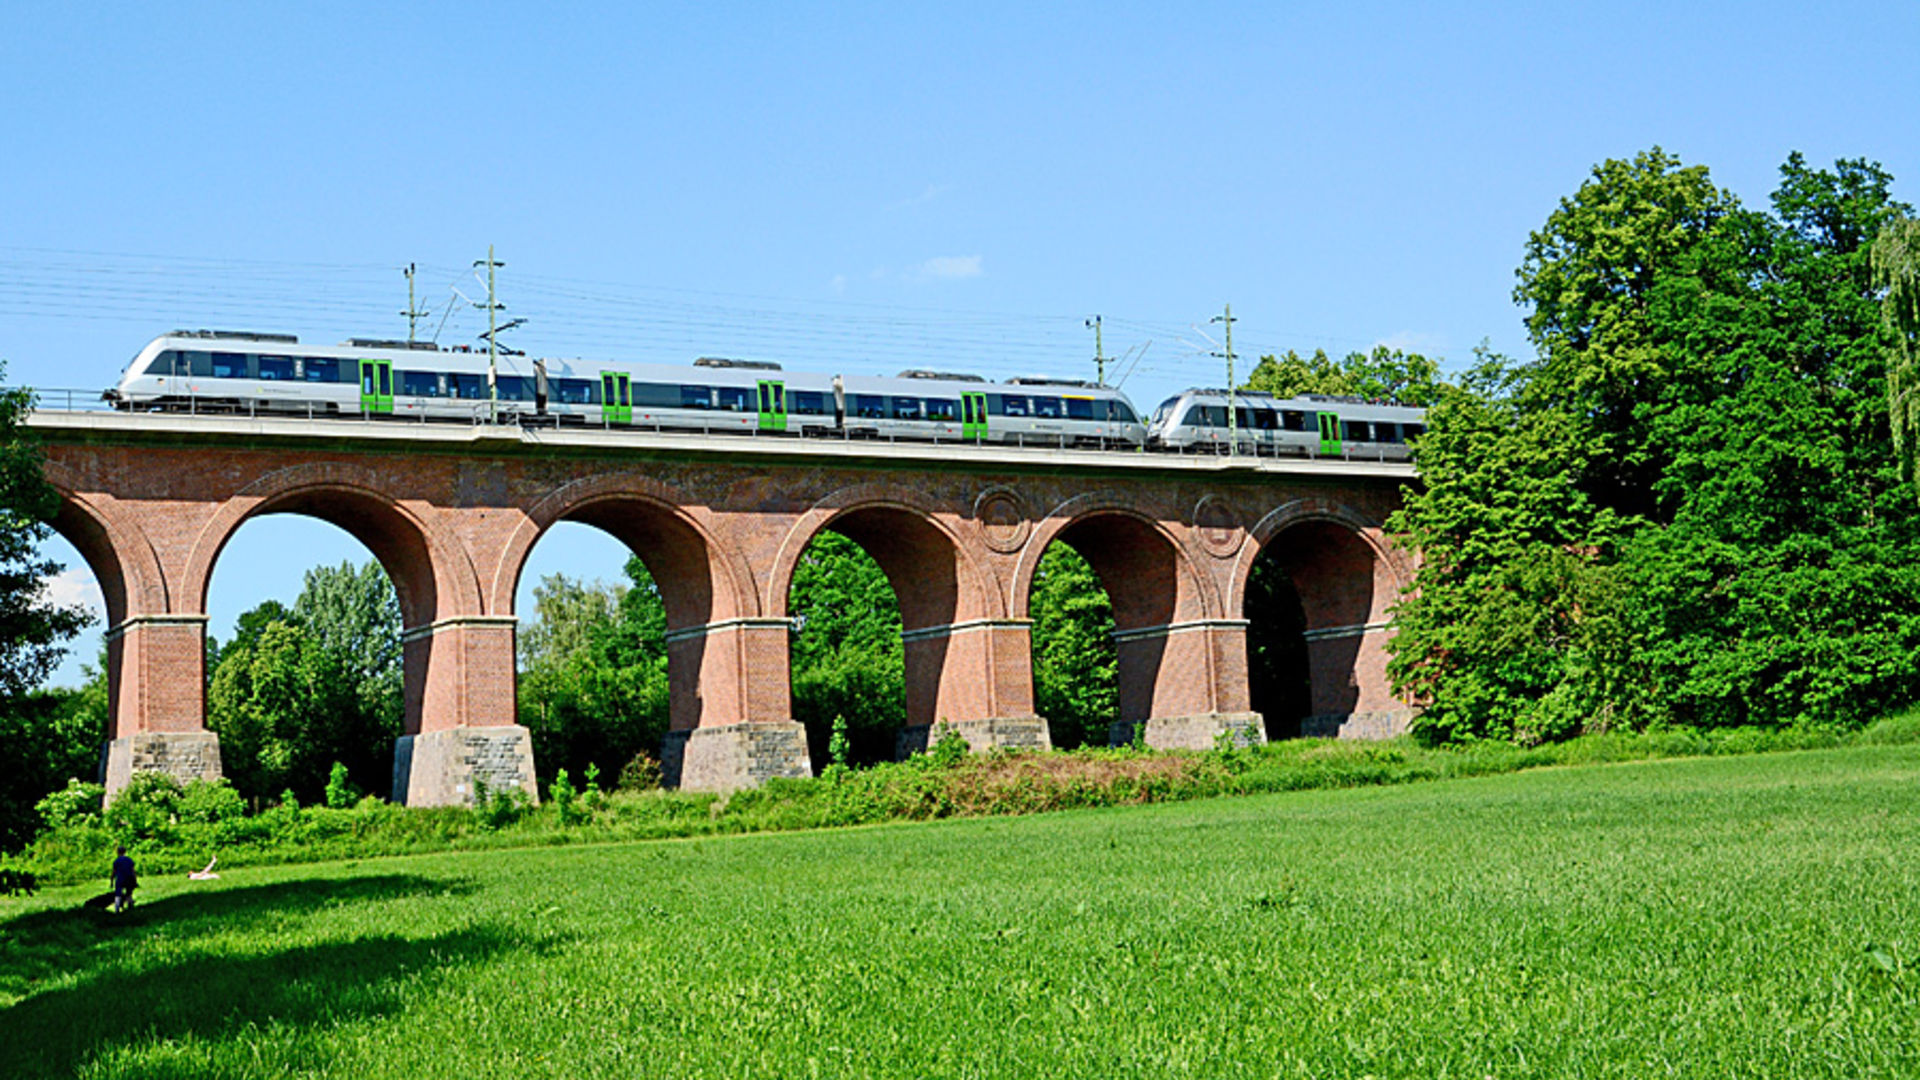 S-Bahn Mitteldeutschland unterwegs 
© info@michaelsperl.de